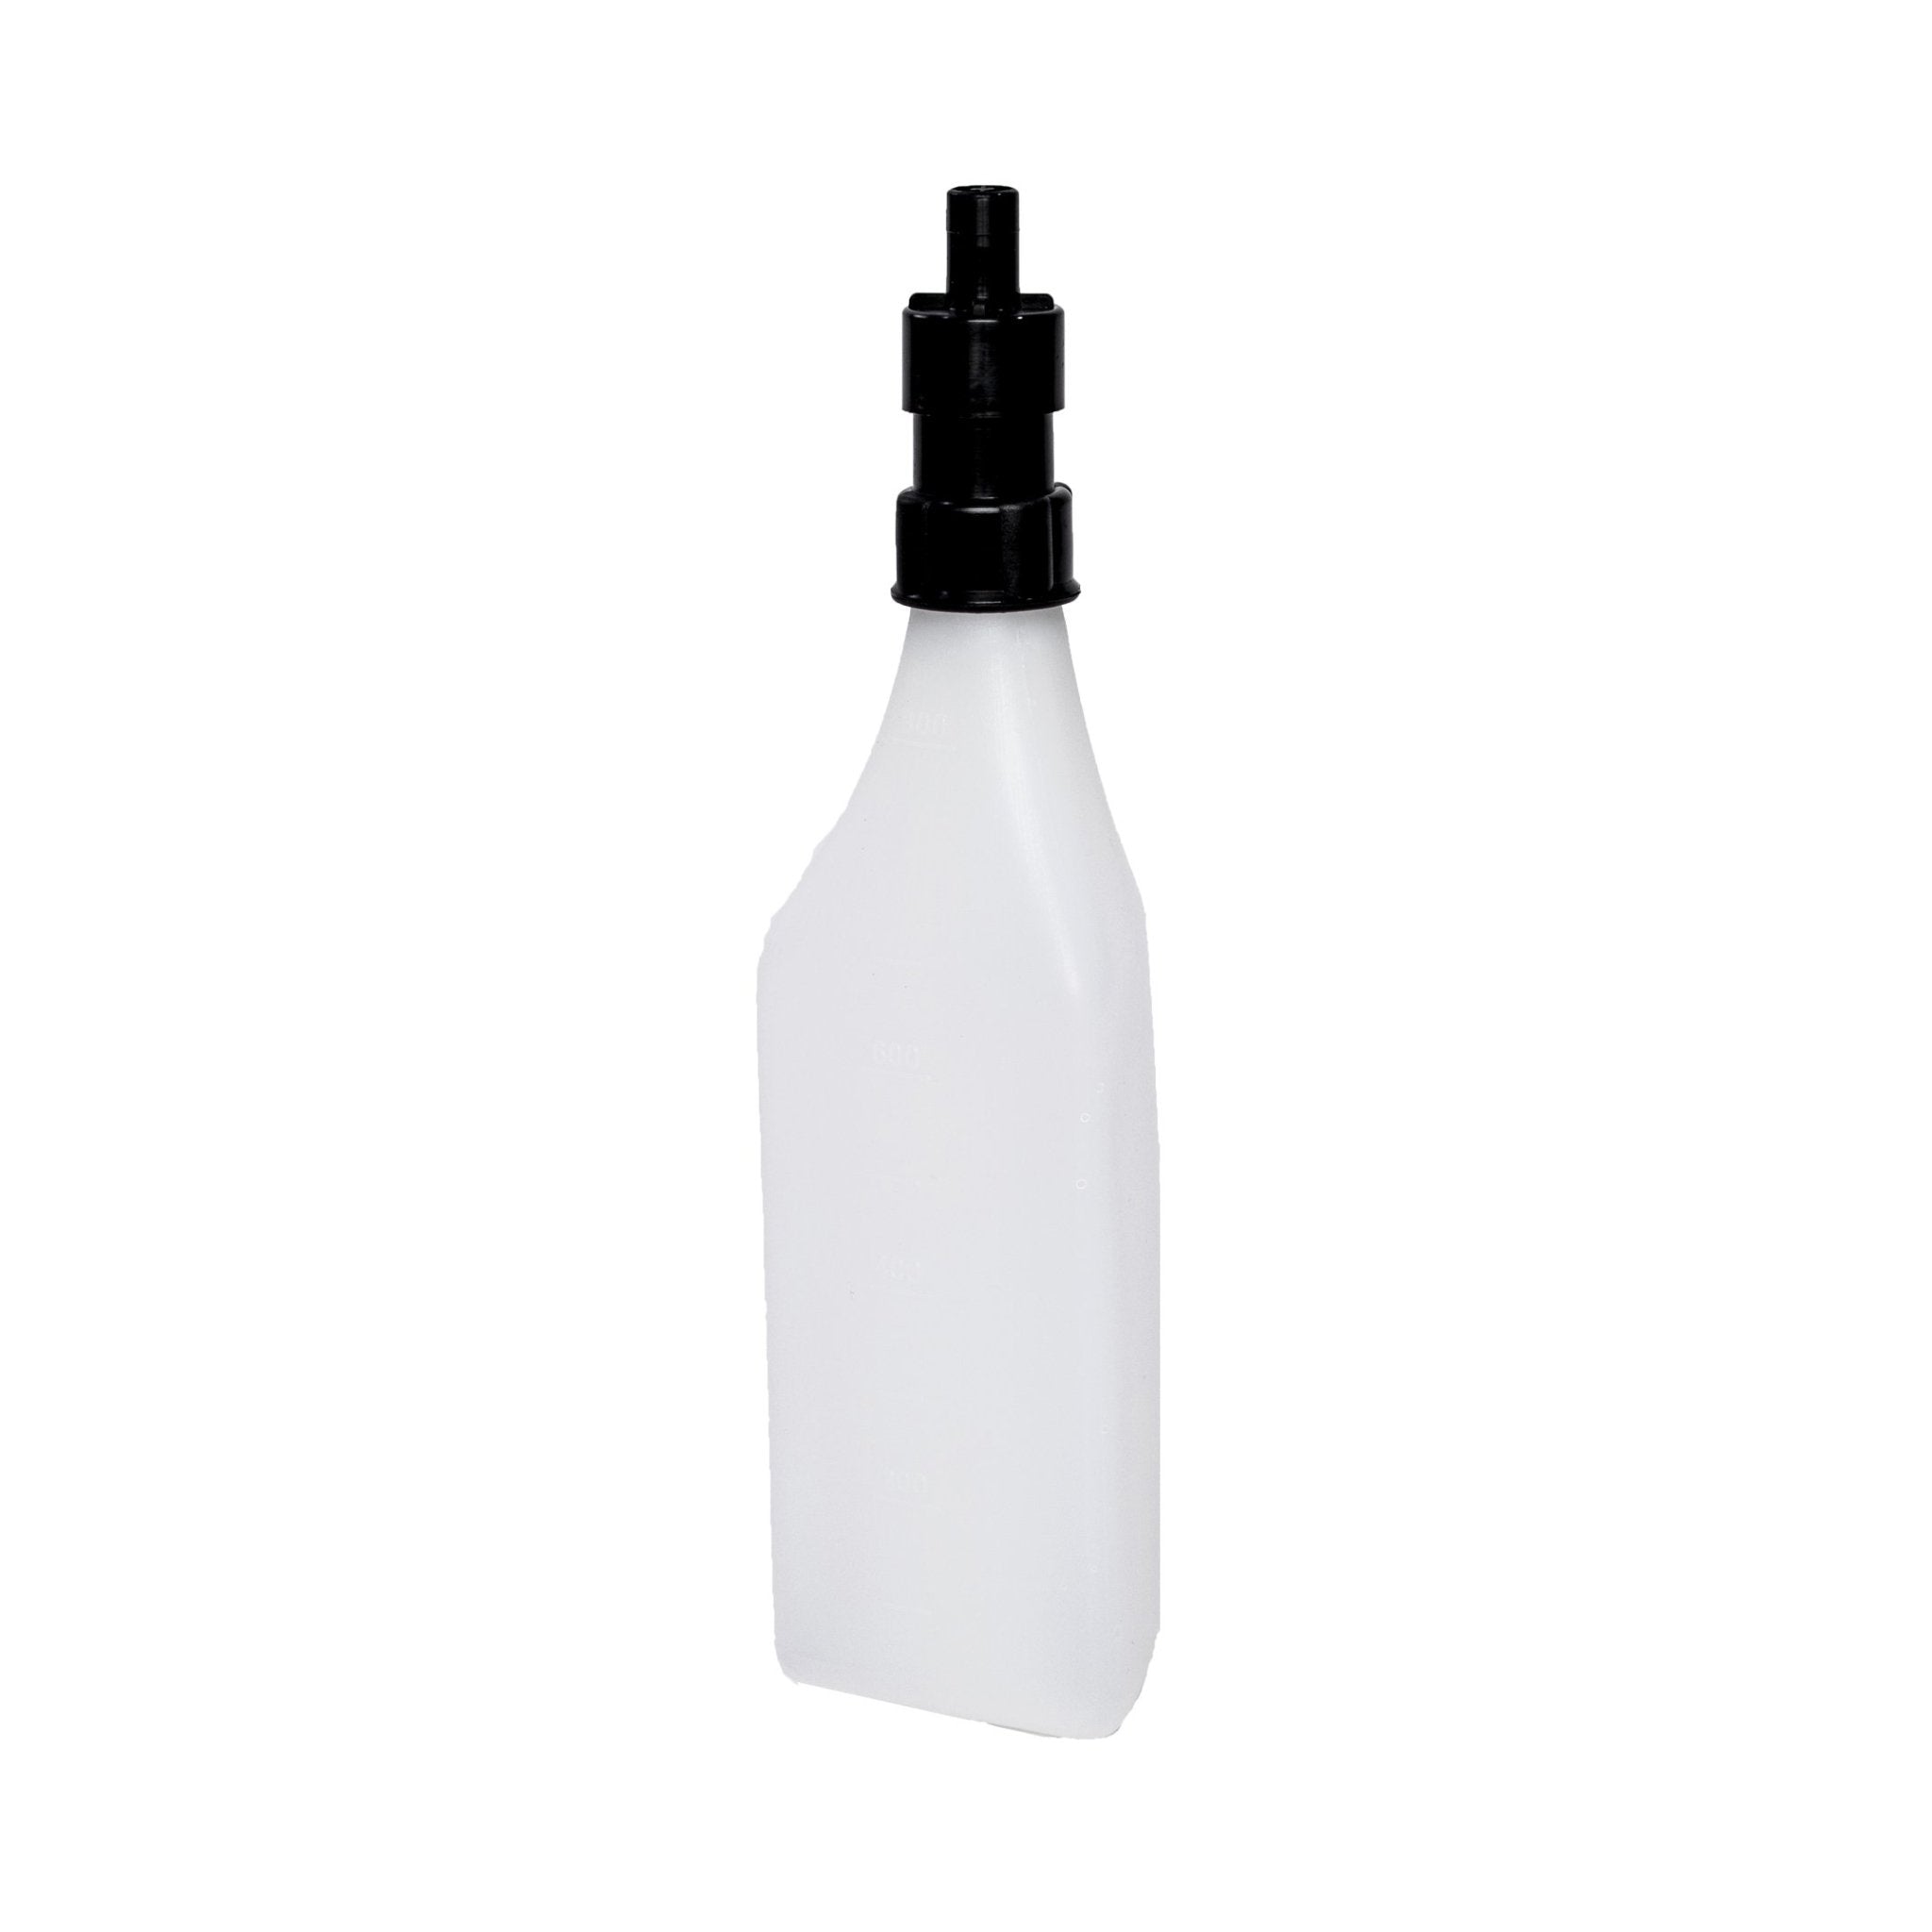 Varro Refill Bottle - Soniclean